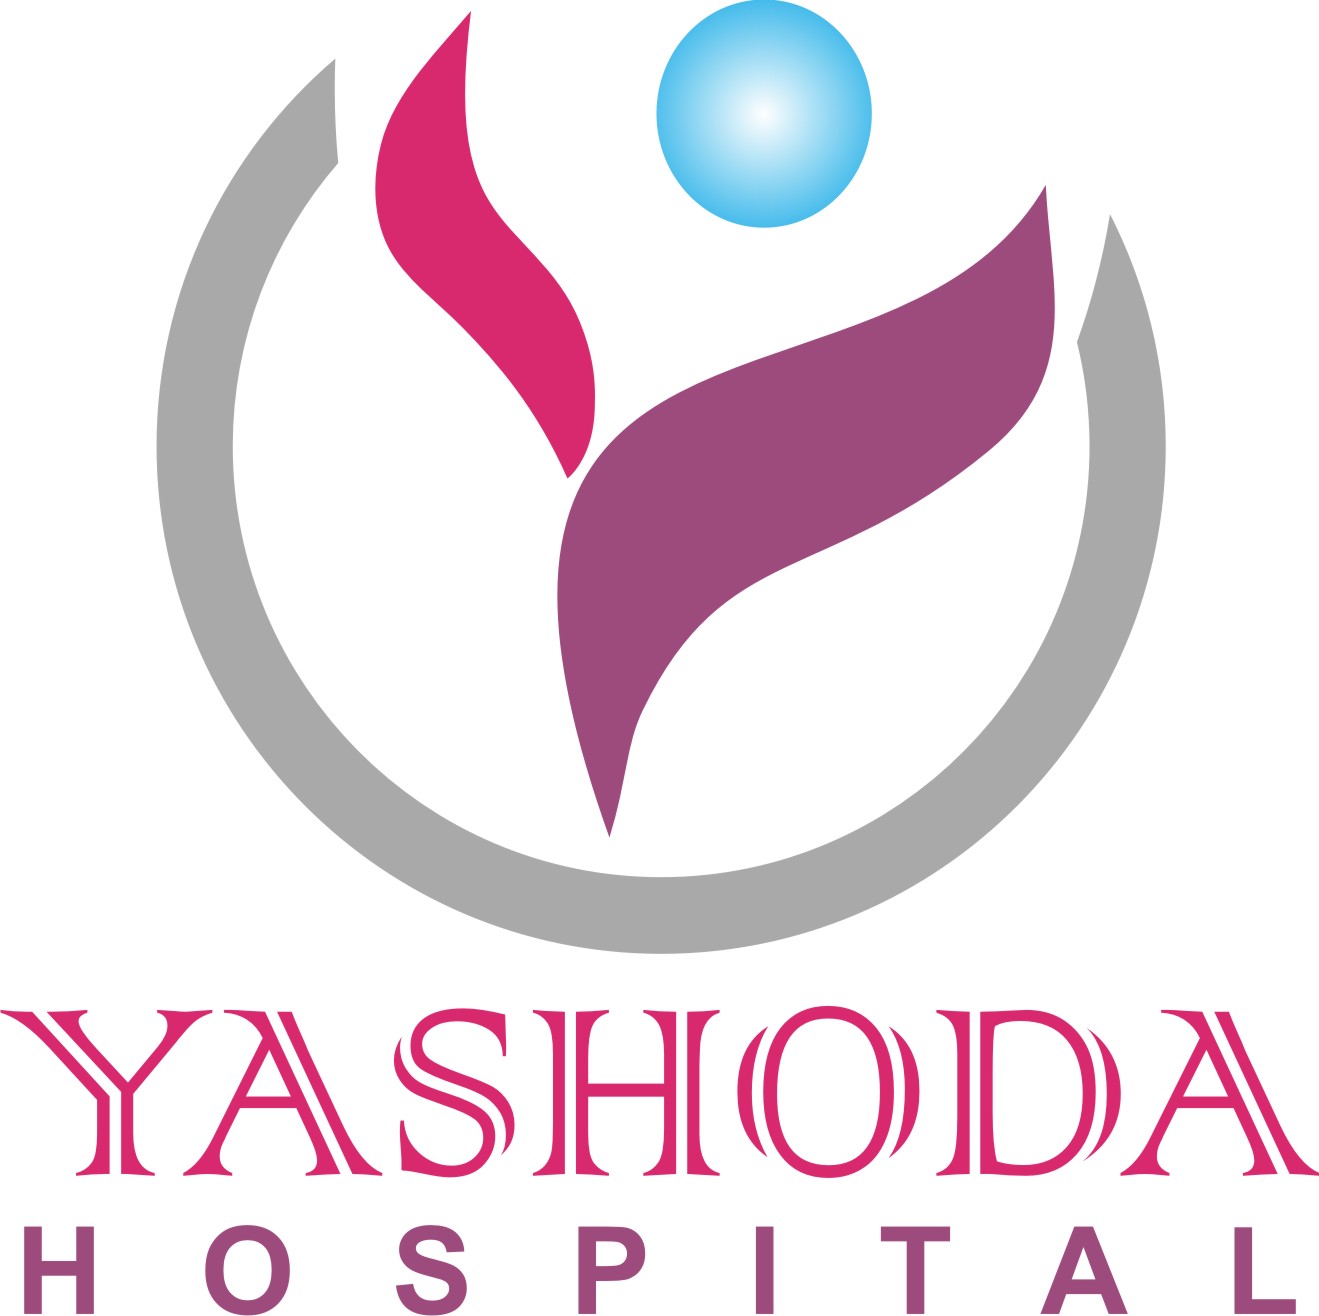 Yashoda Hospital|Dentists|Medical Services